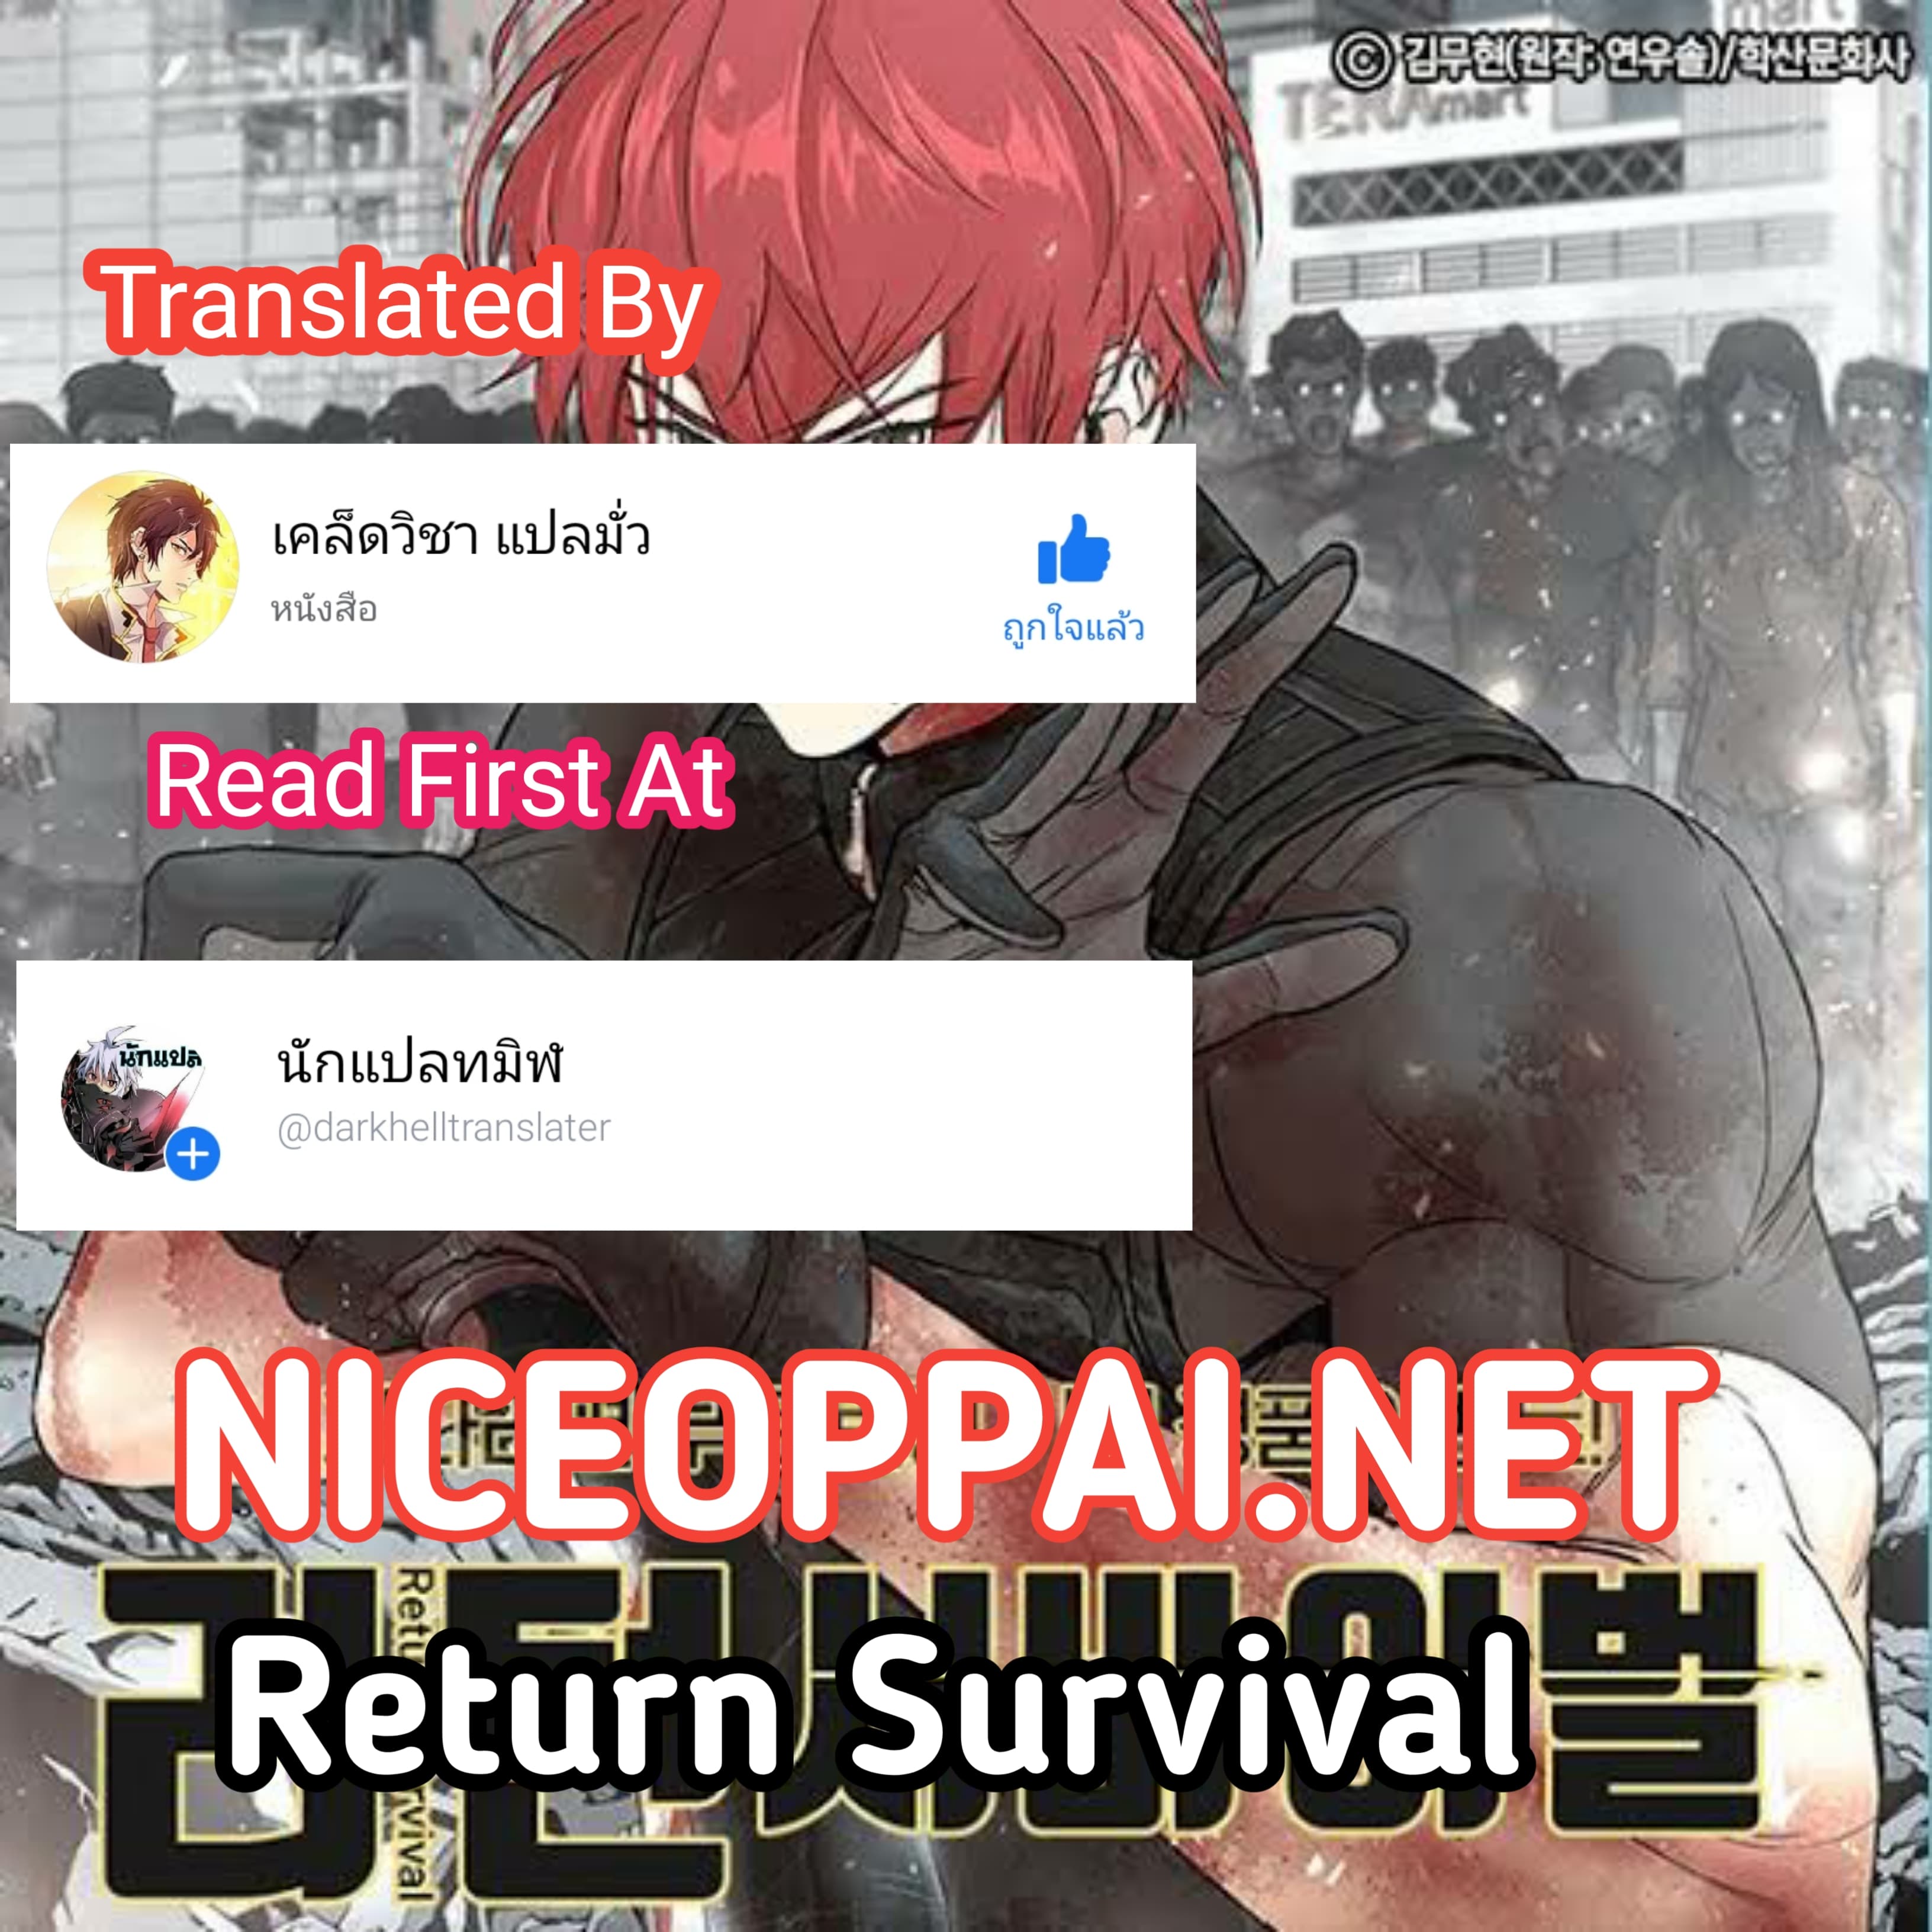 Return Survival0 (12)